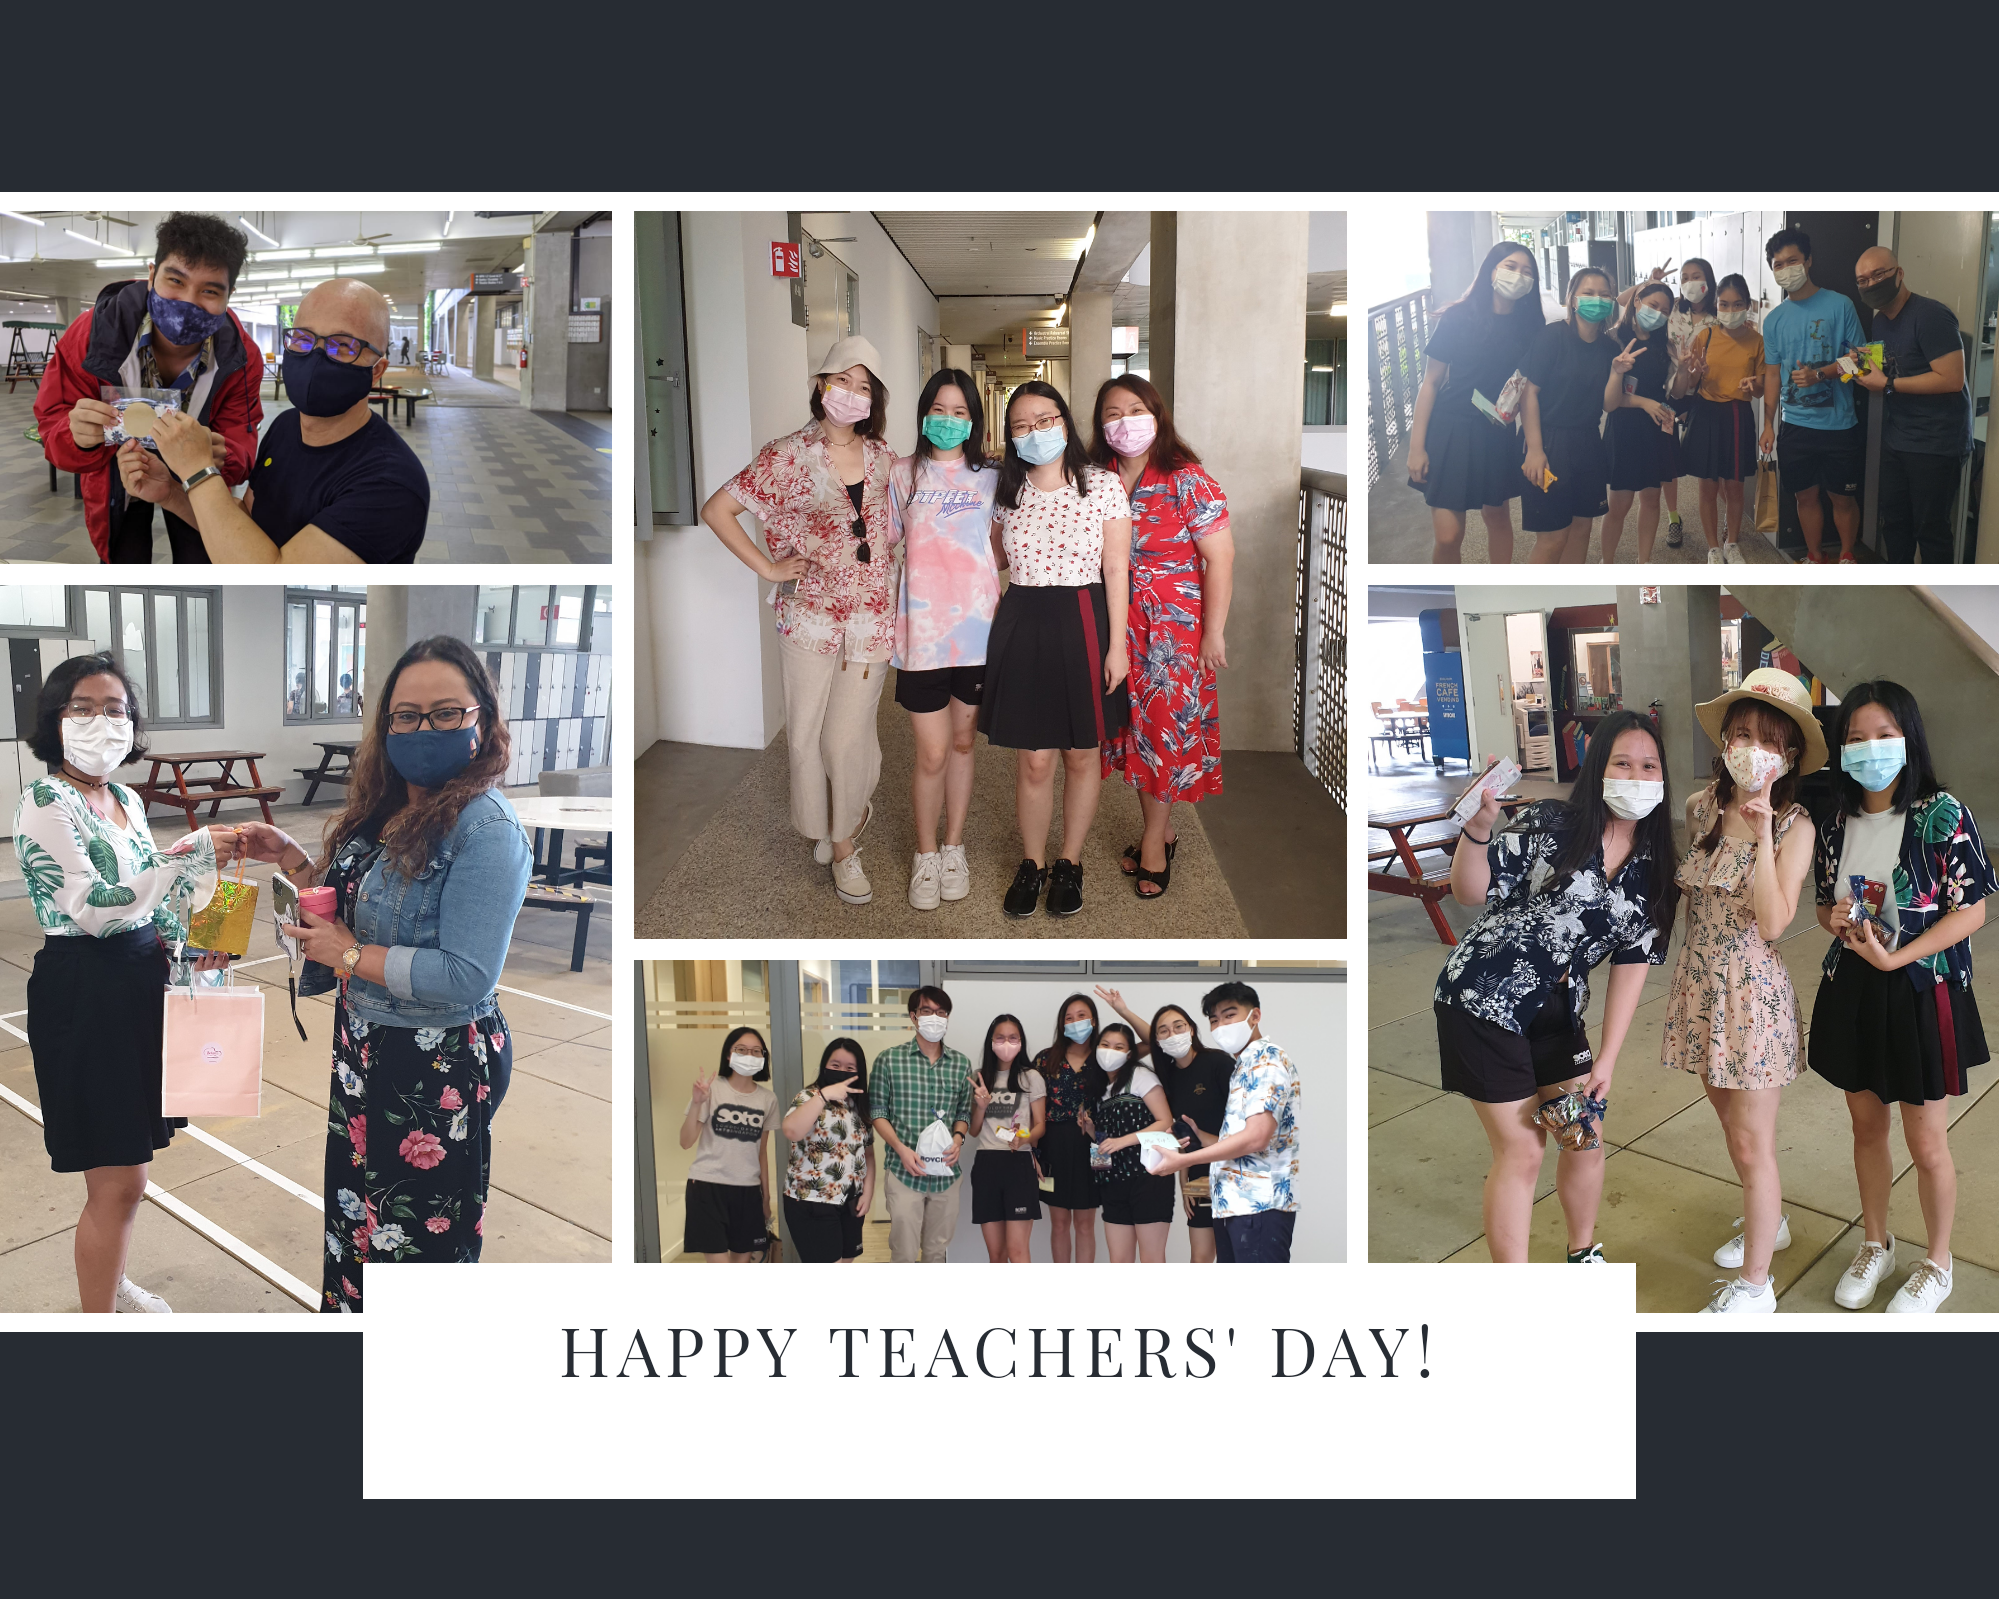 Teachers Day 2020